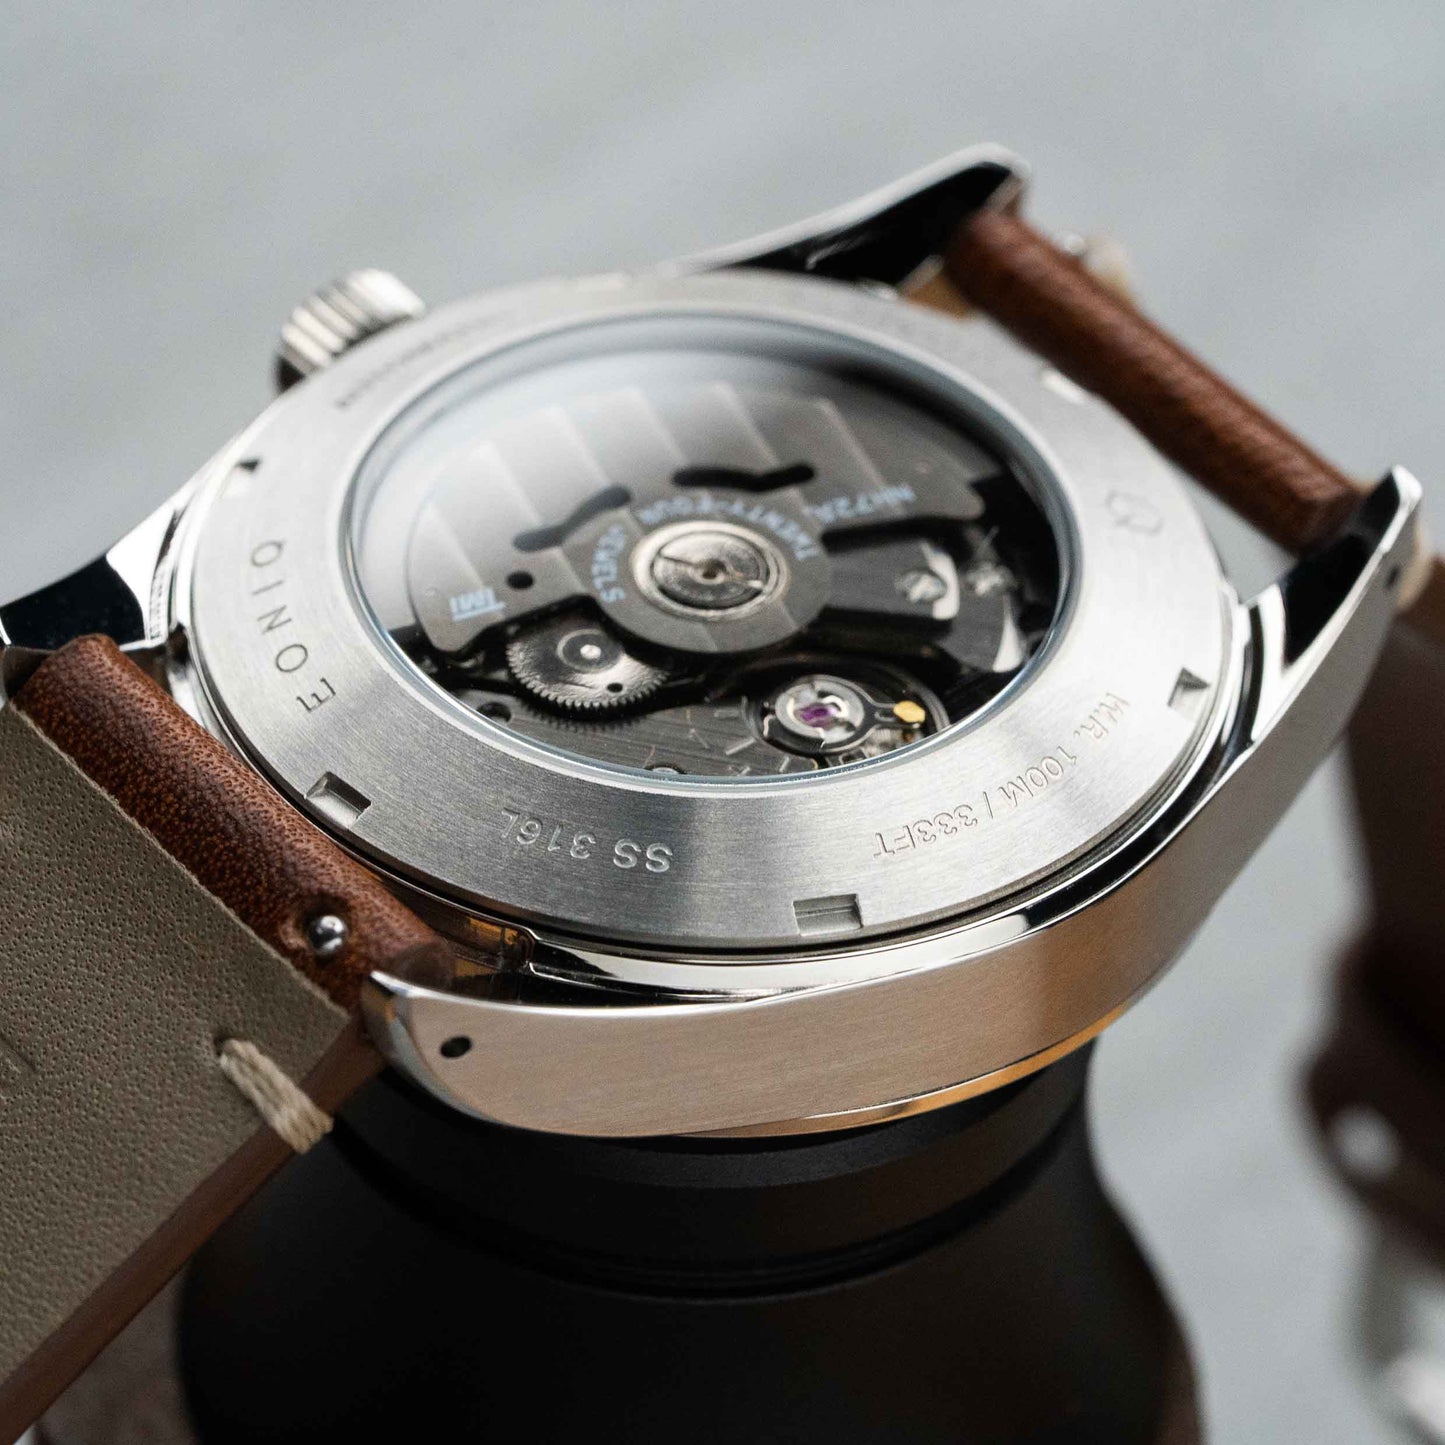 EONIQ expedition watch - custom watch with seiko movement